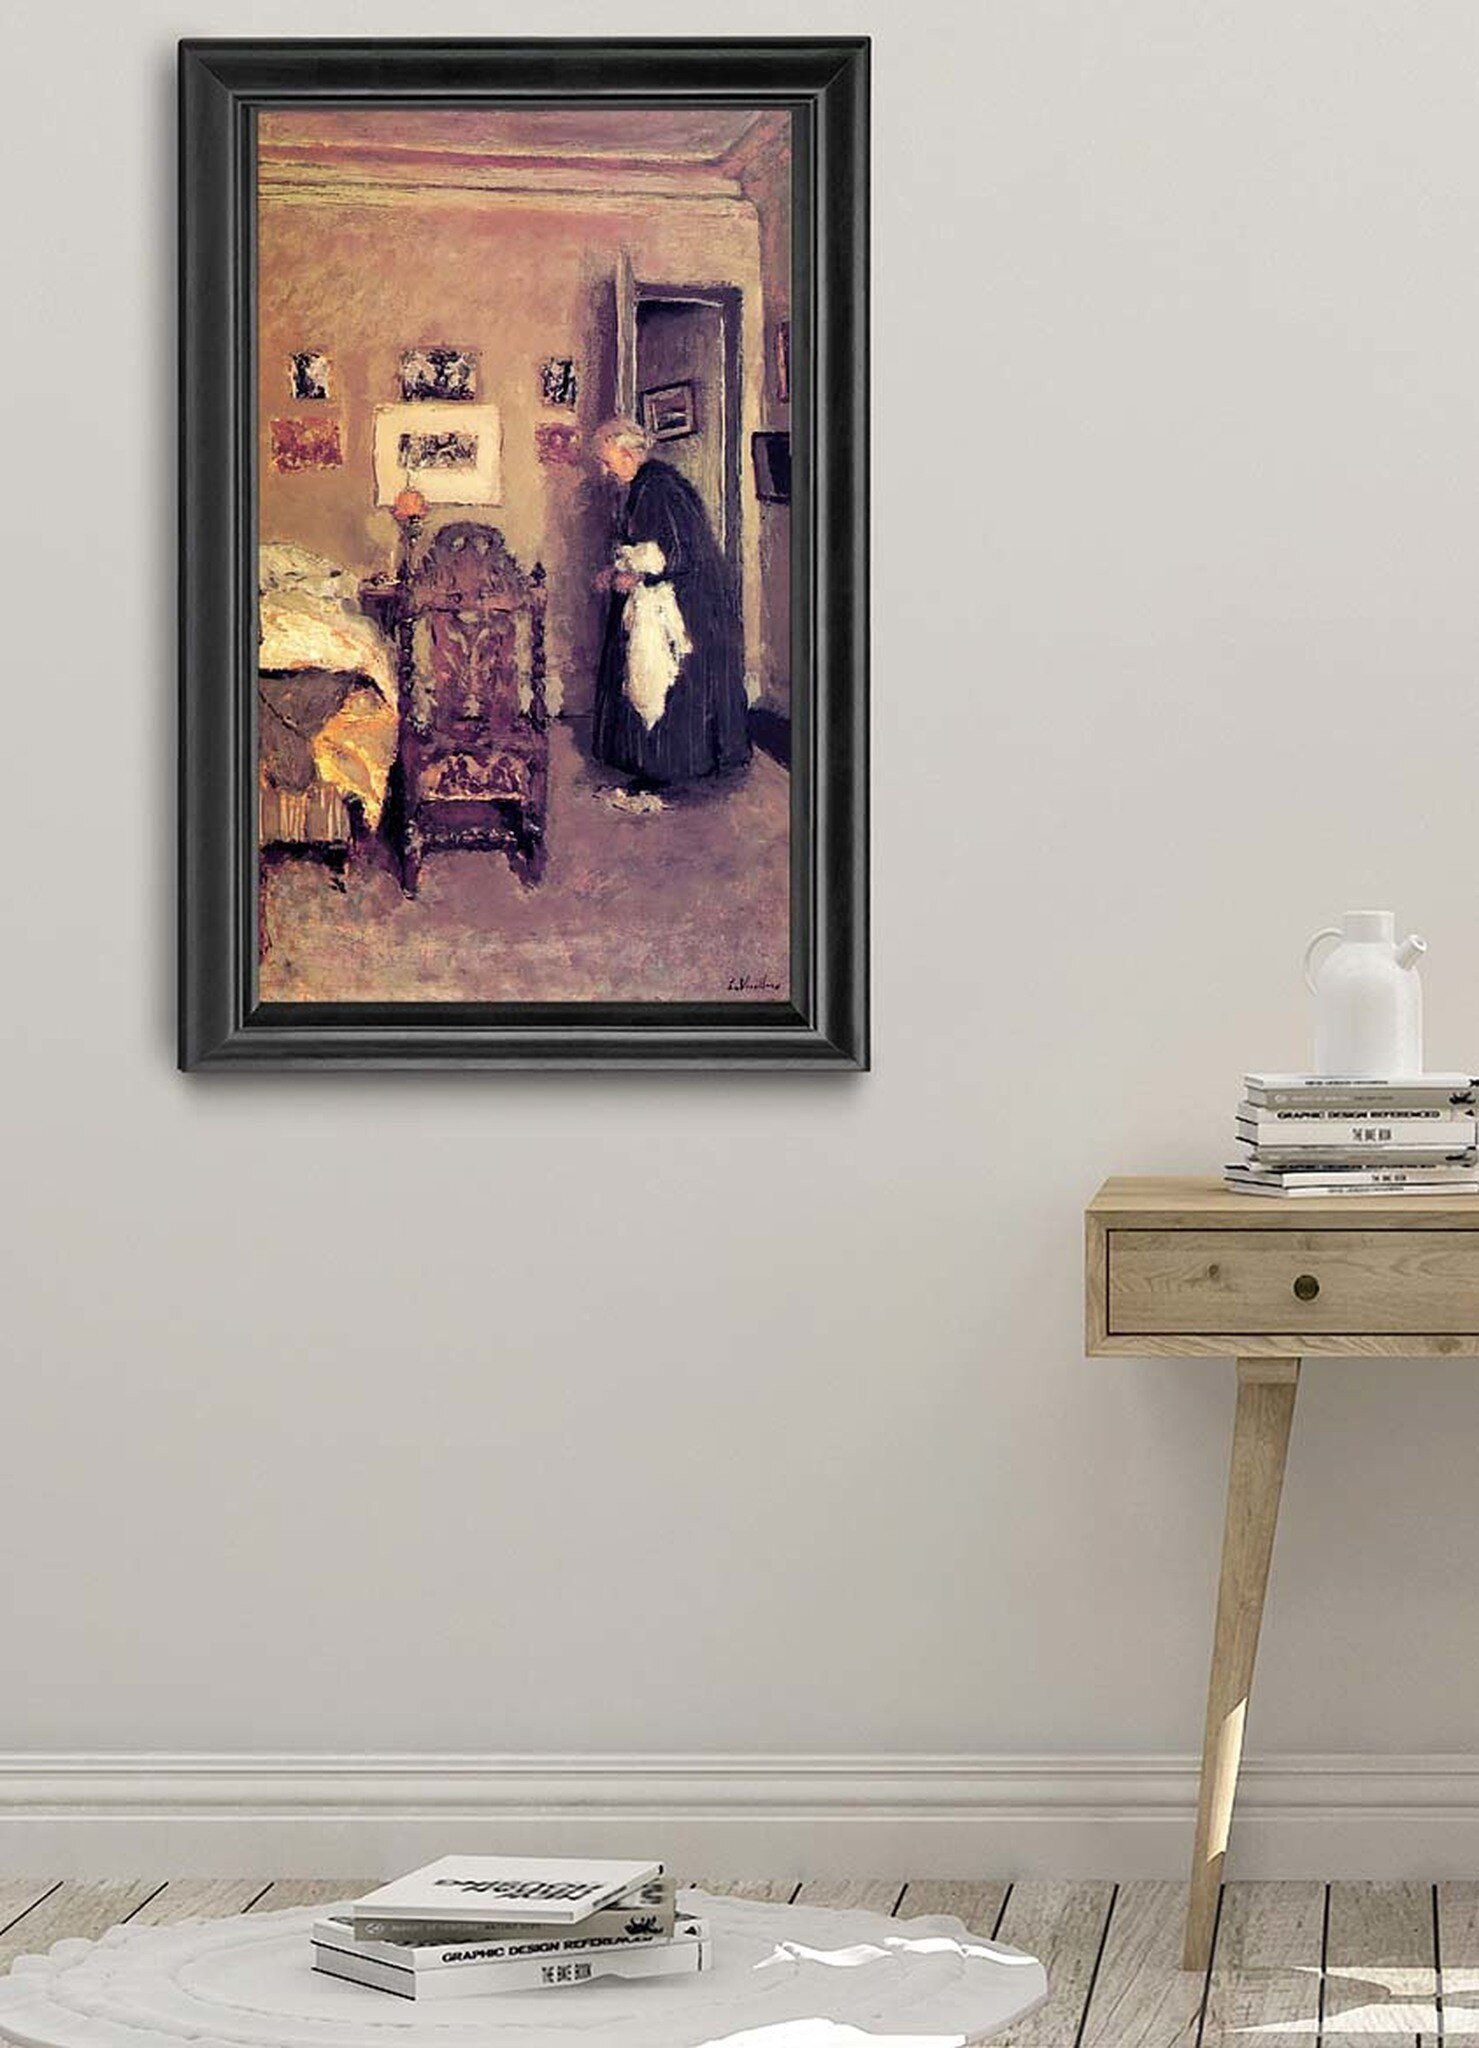 Artwork for Bedroom Walls Luxury Mme Vuillard In the Artist S Bedroom Rue De Calais by Edouard Vuillard